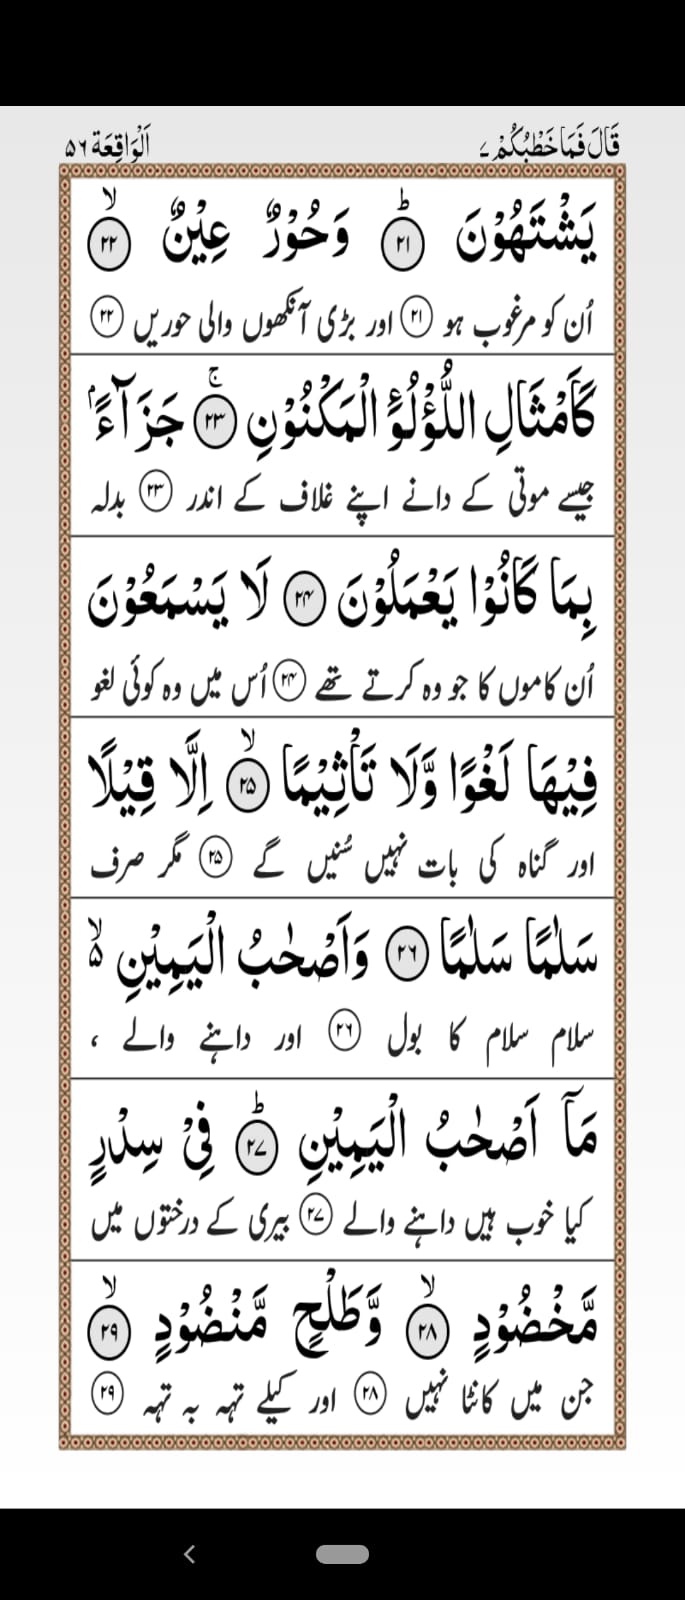 Surah Waqiah with Urdu Translation Page 4